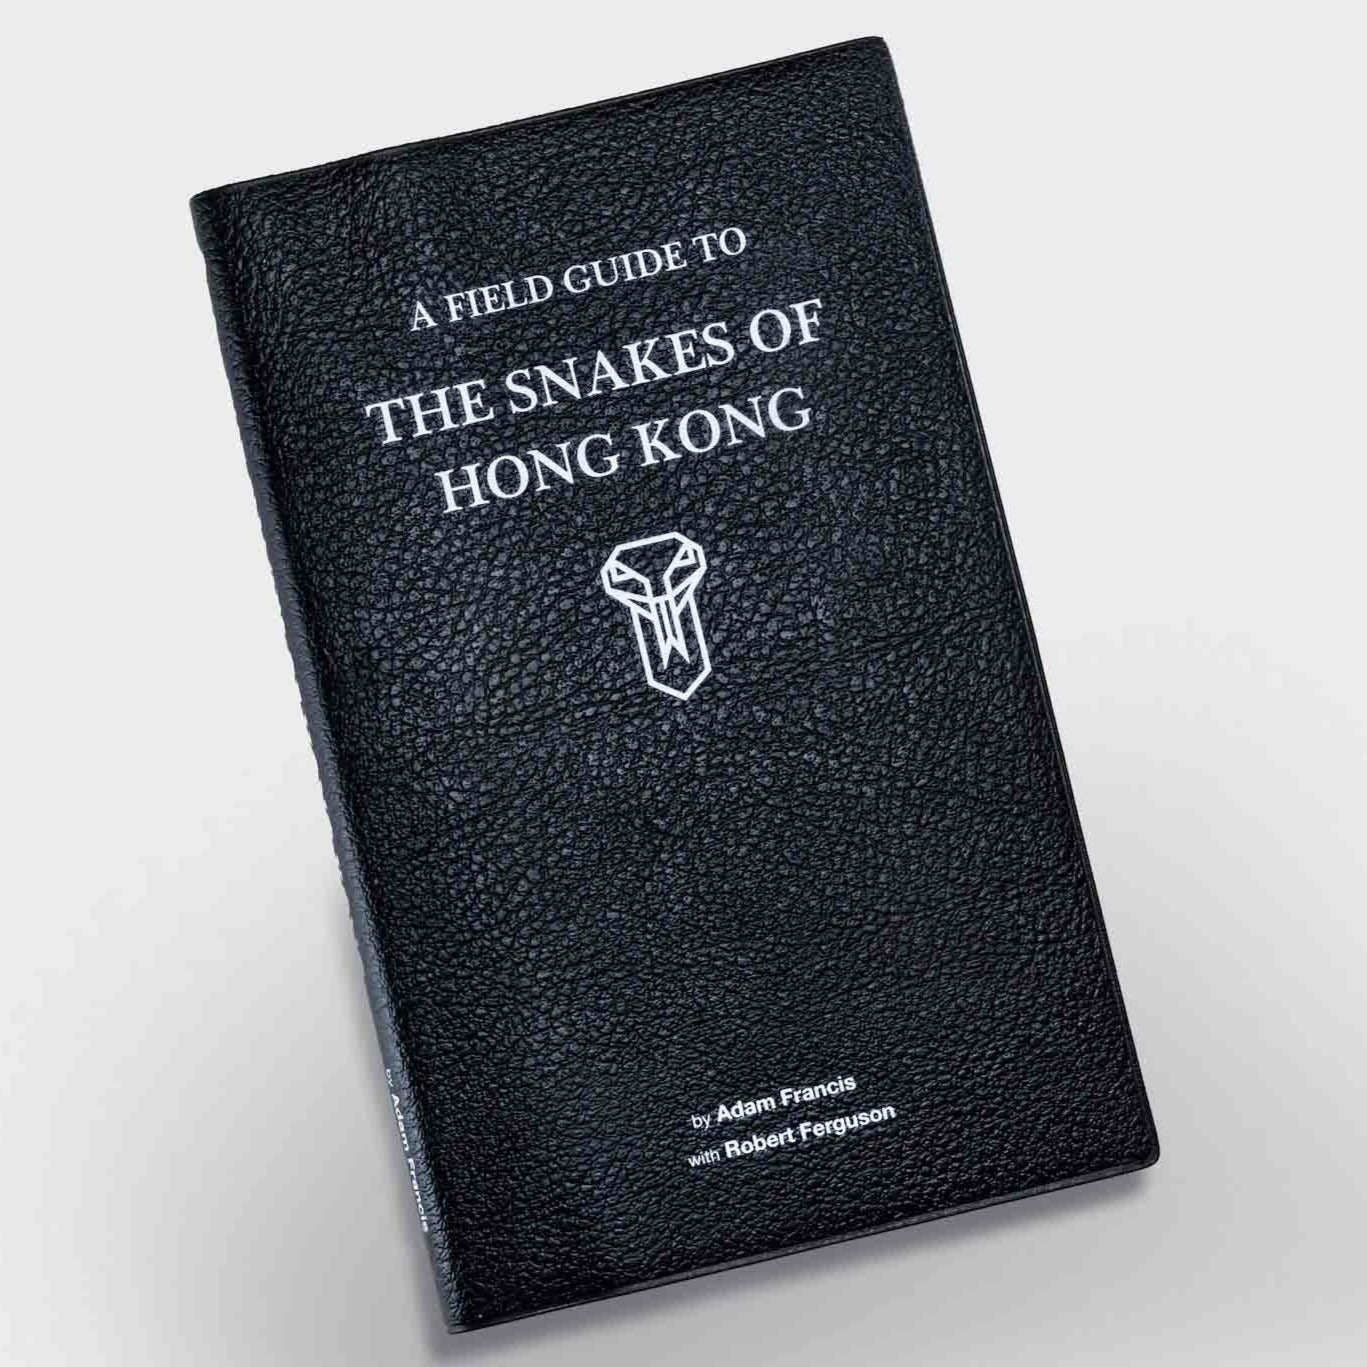 Lavender BOOK: The Snakes of Hong Kong